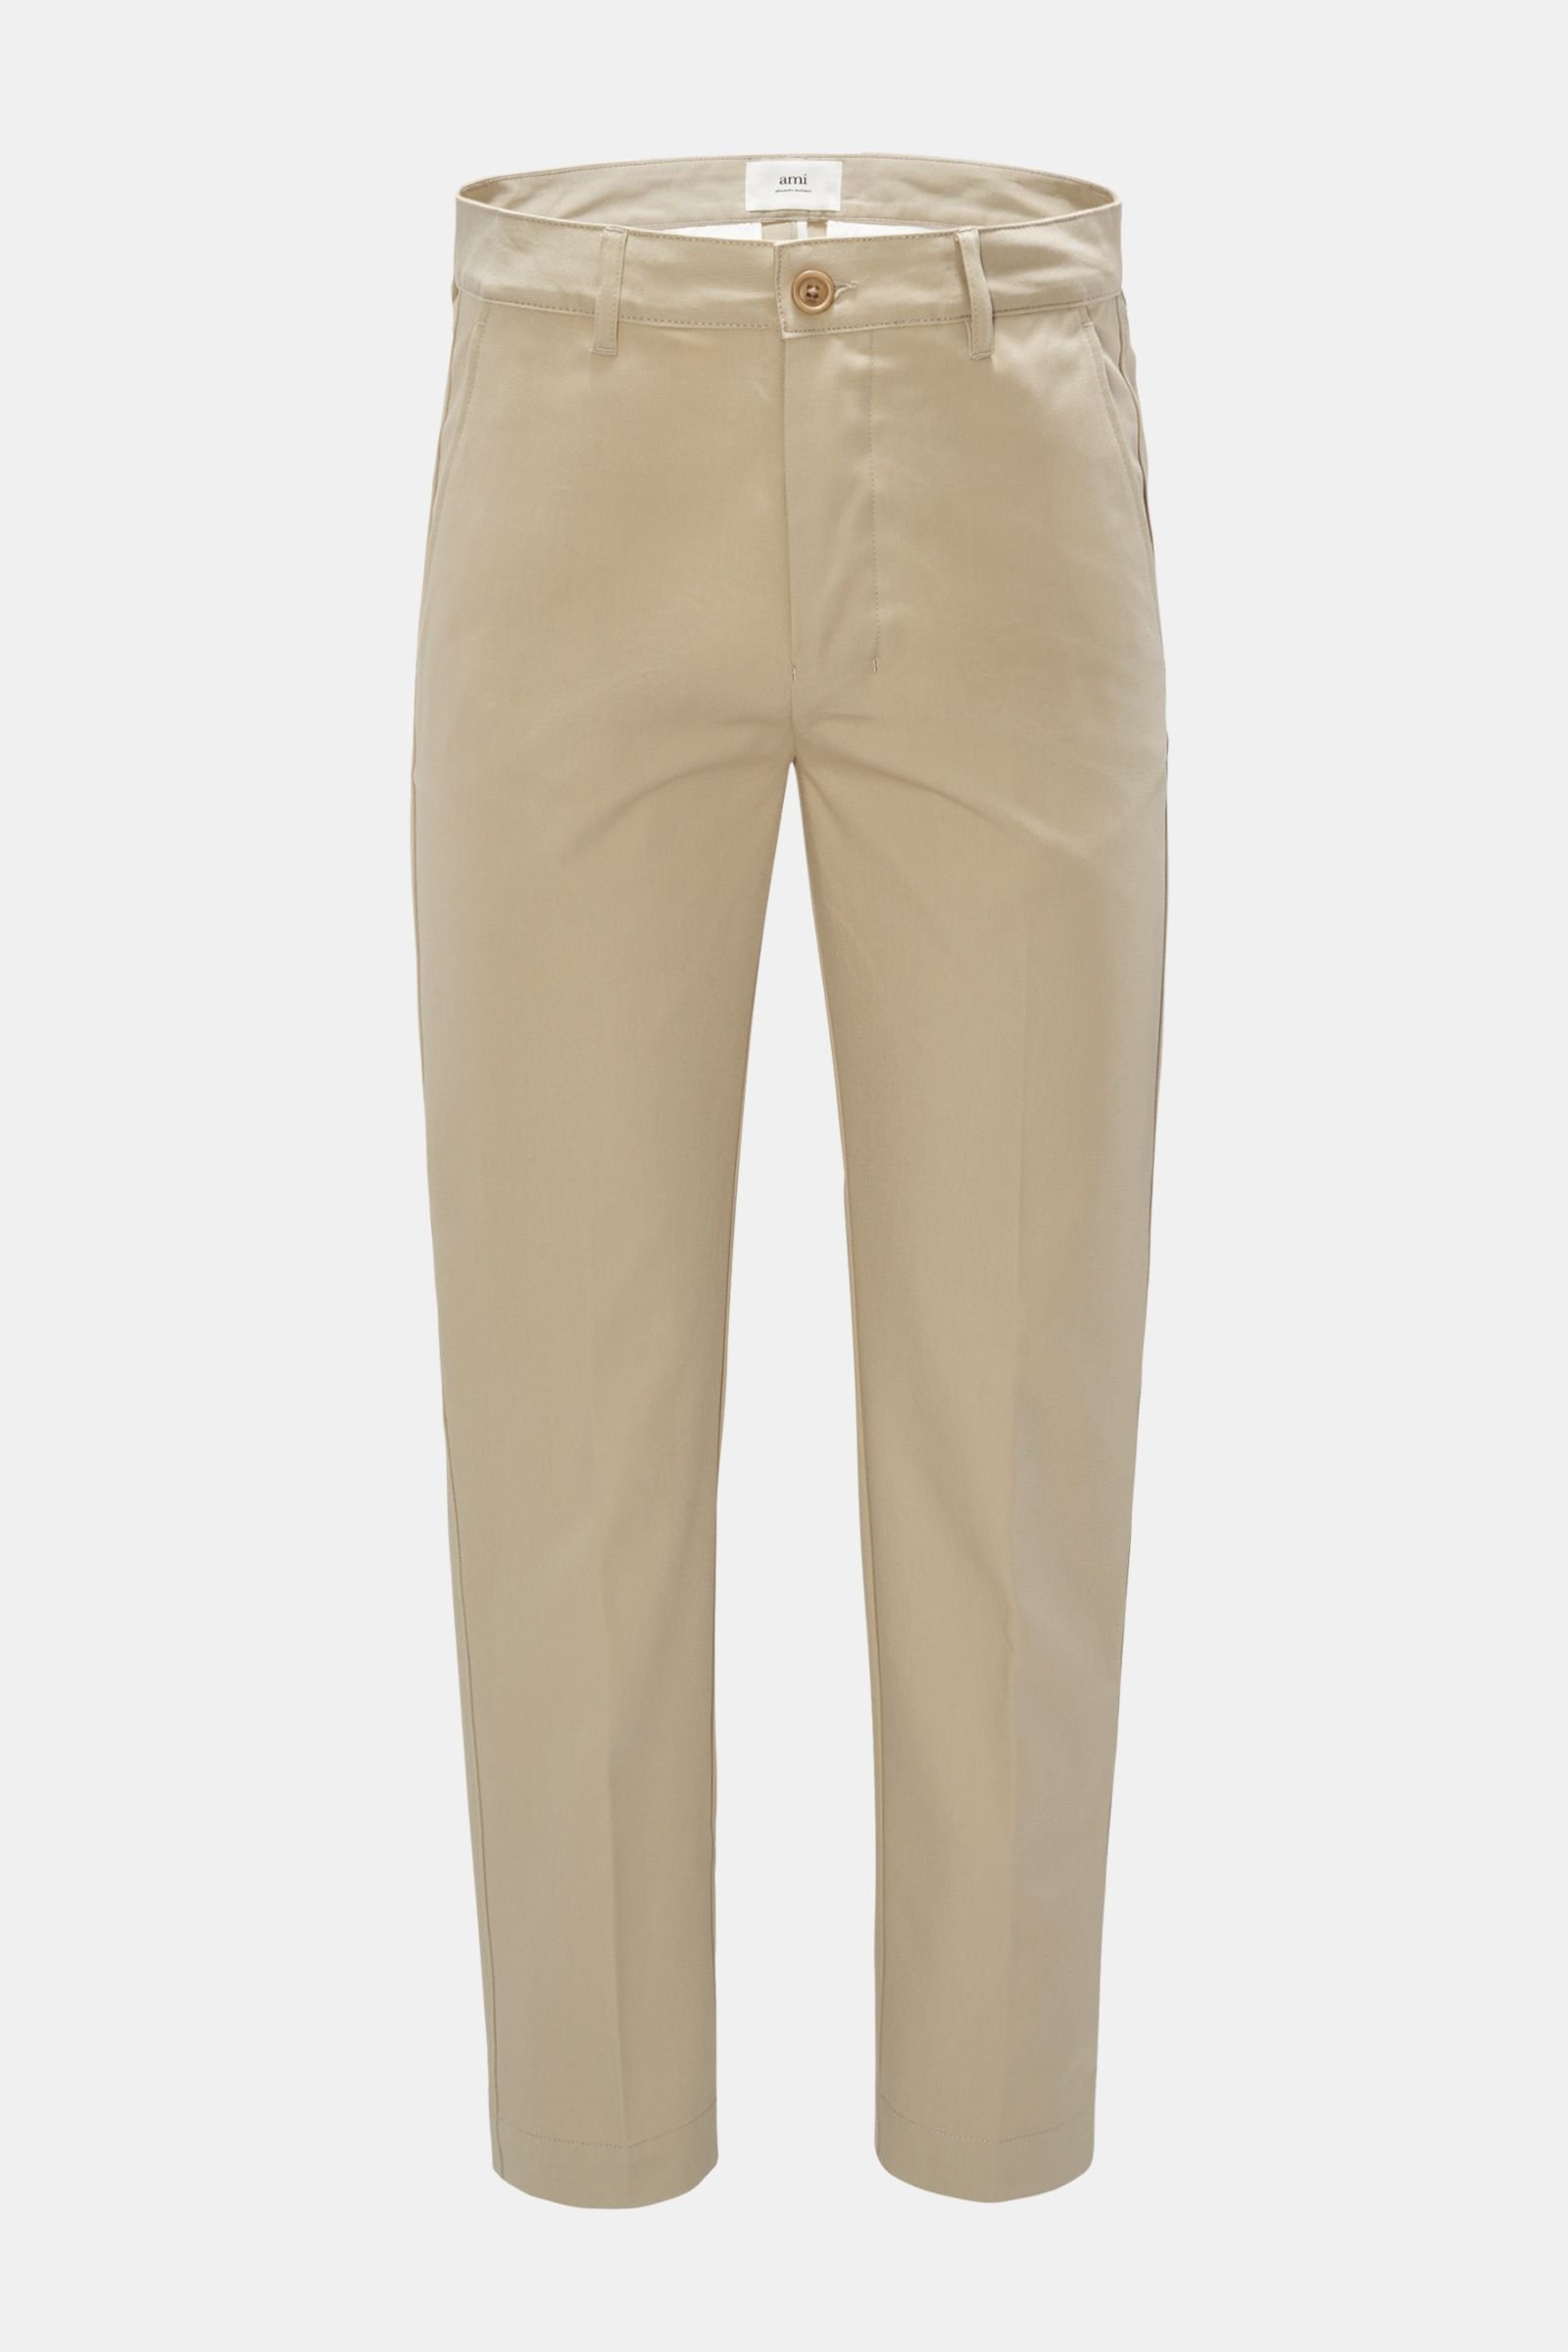 Cotton trousers beige